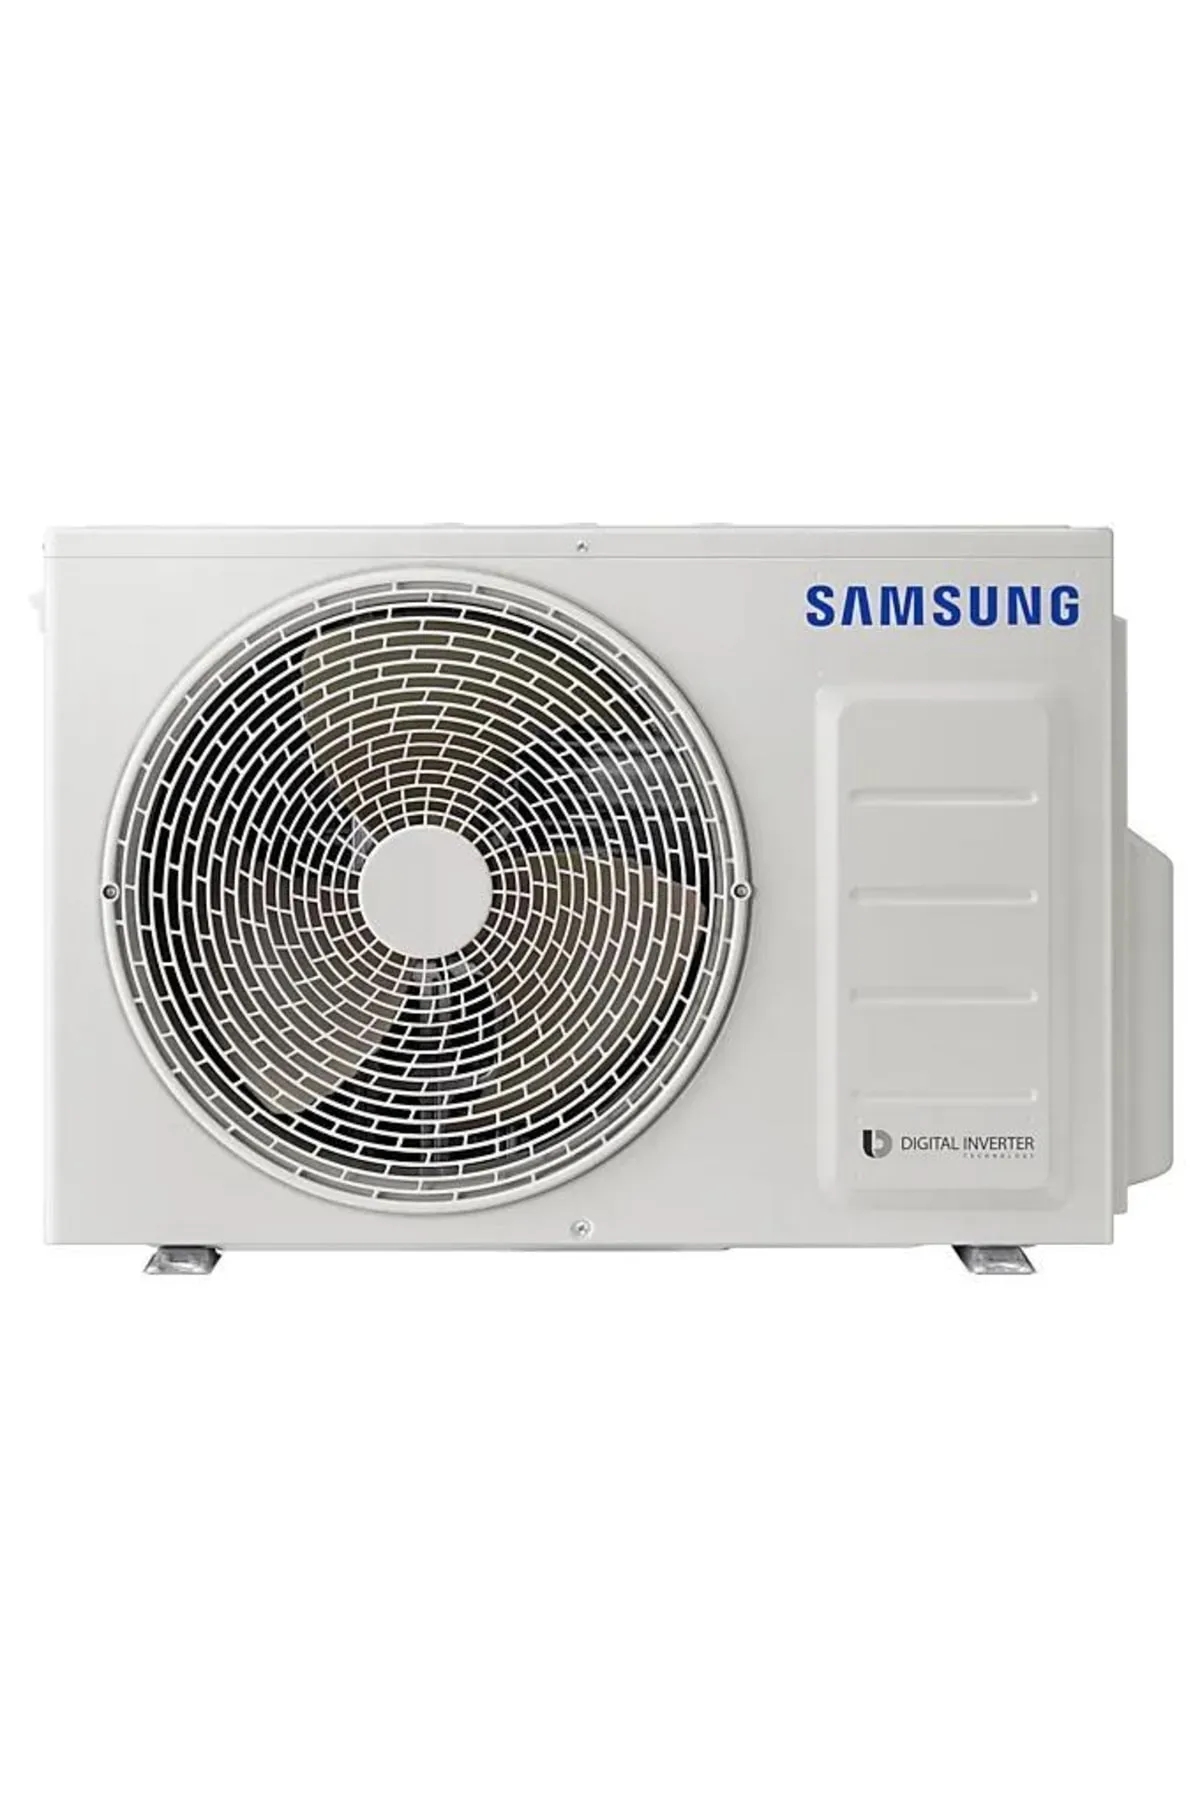 Samsung Windfree™ Multi Klima Takımı 1+2 Sistem 18+18 Btu/h İç Ünite 6,8 kW Dış Ünite